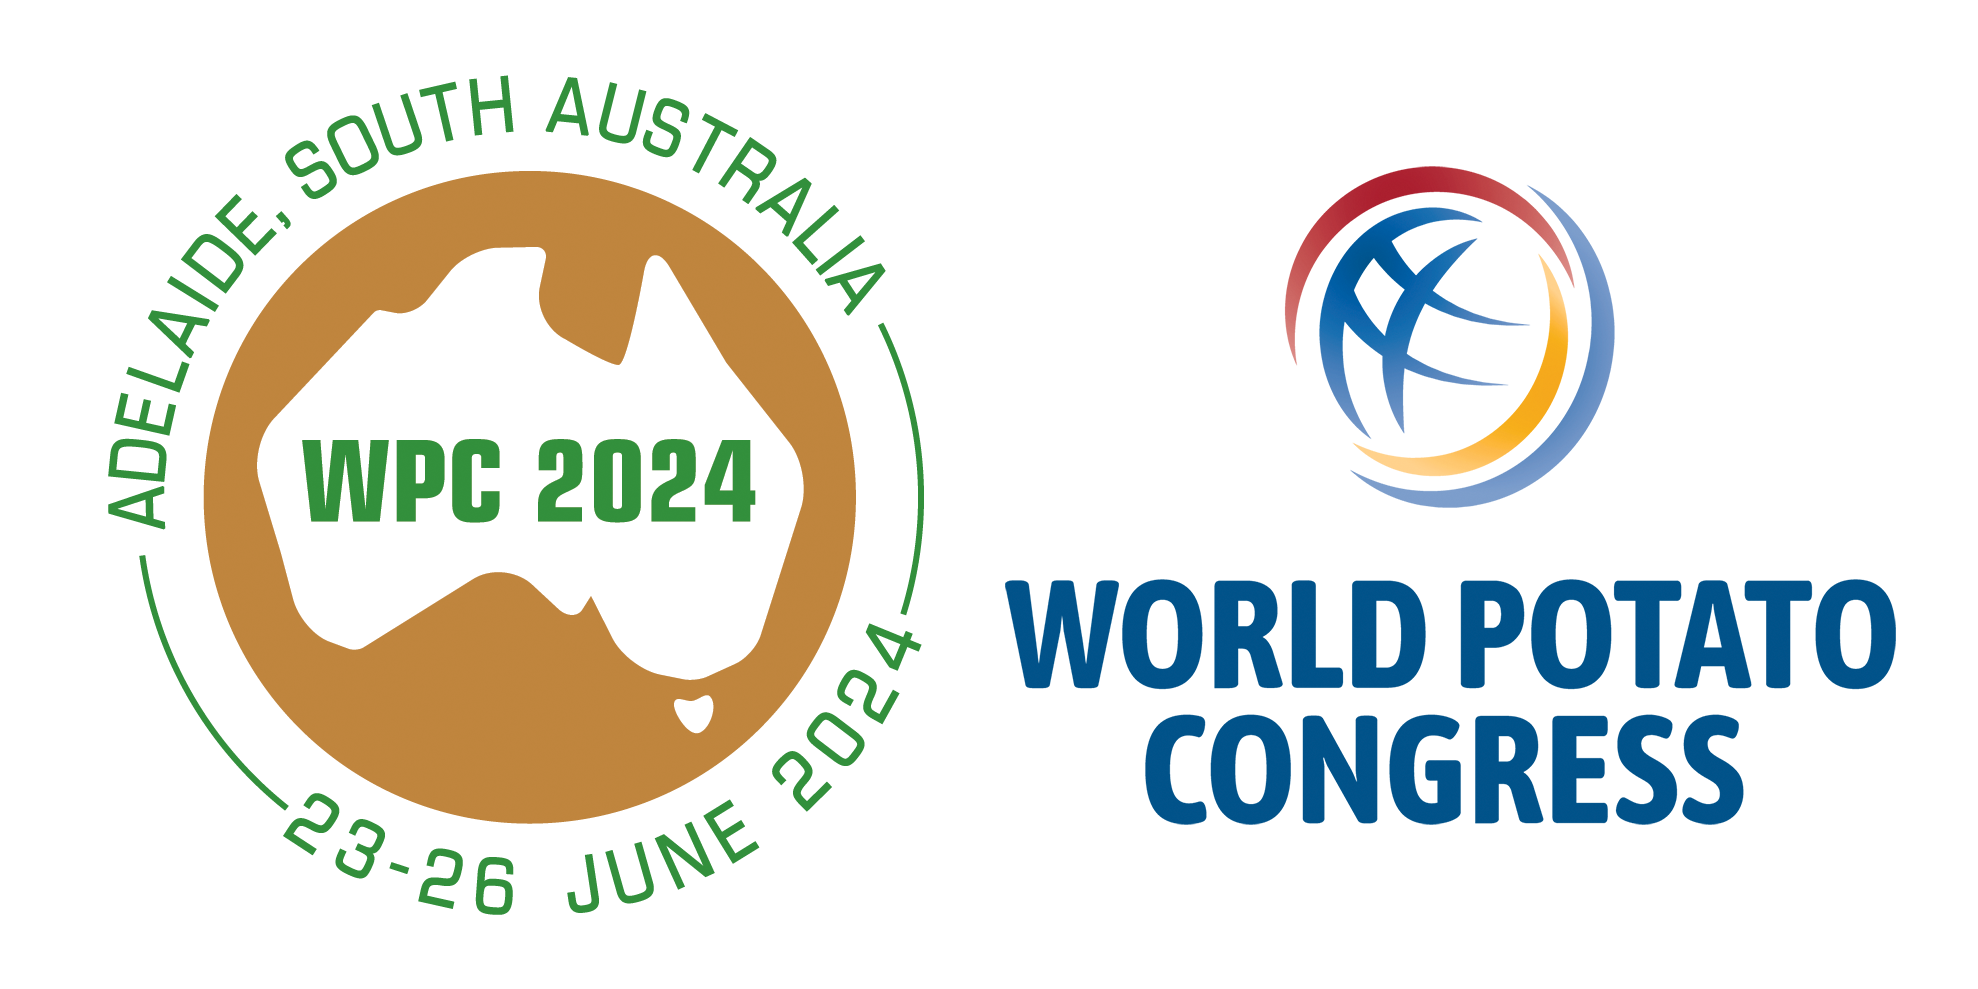 event: World Potato Congress 2024